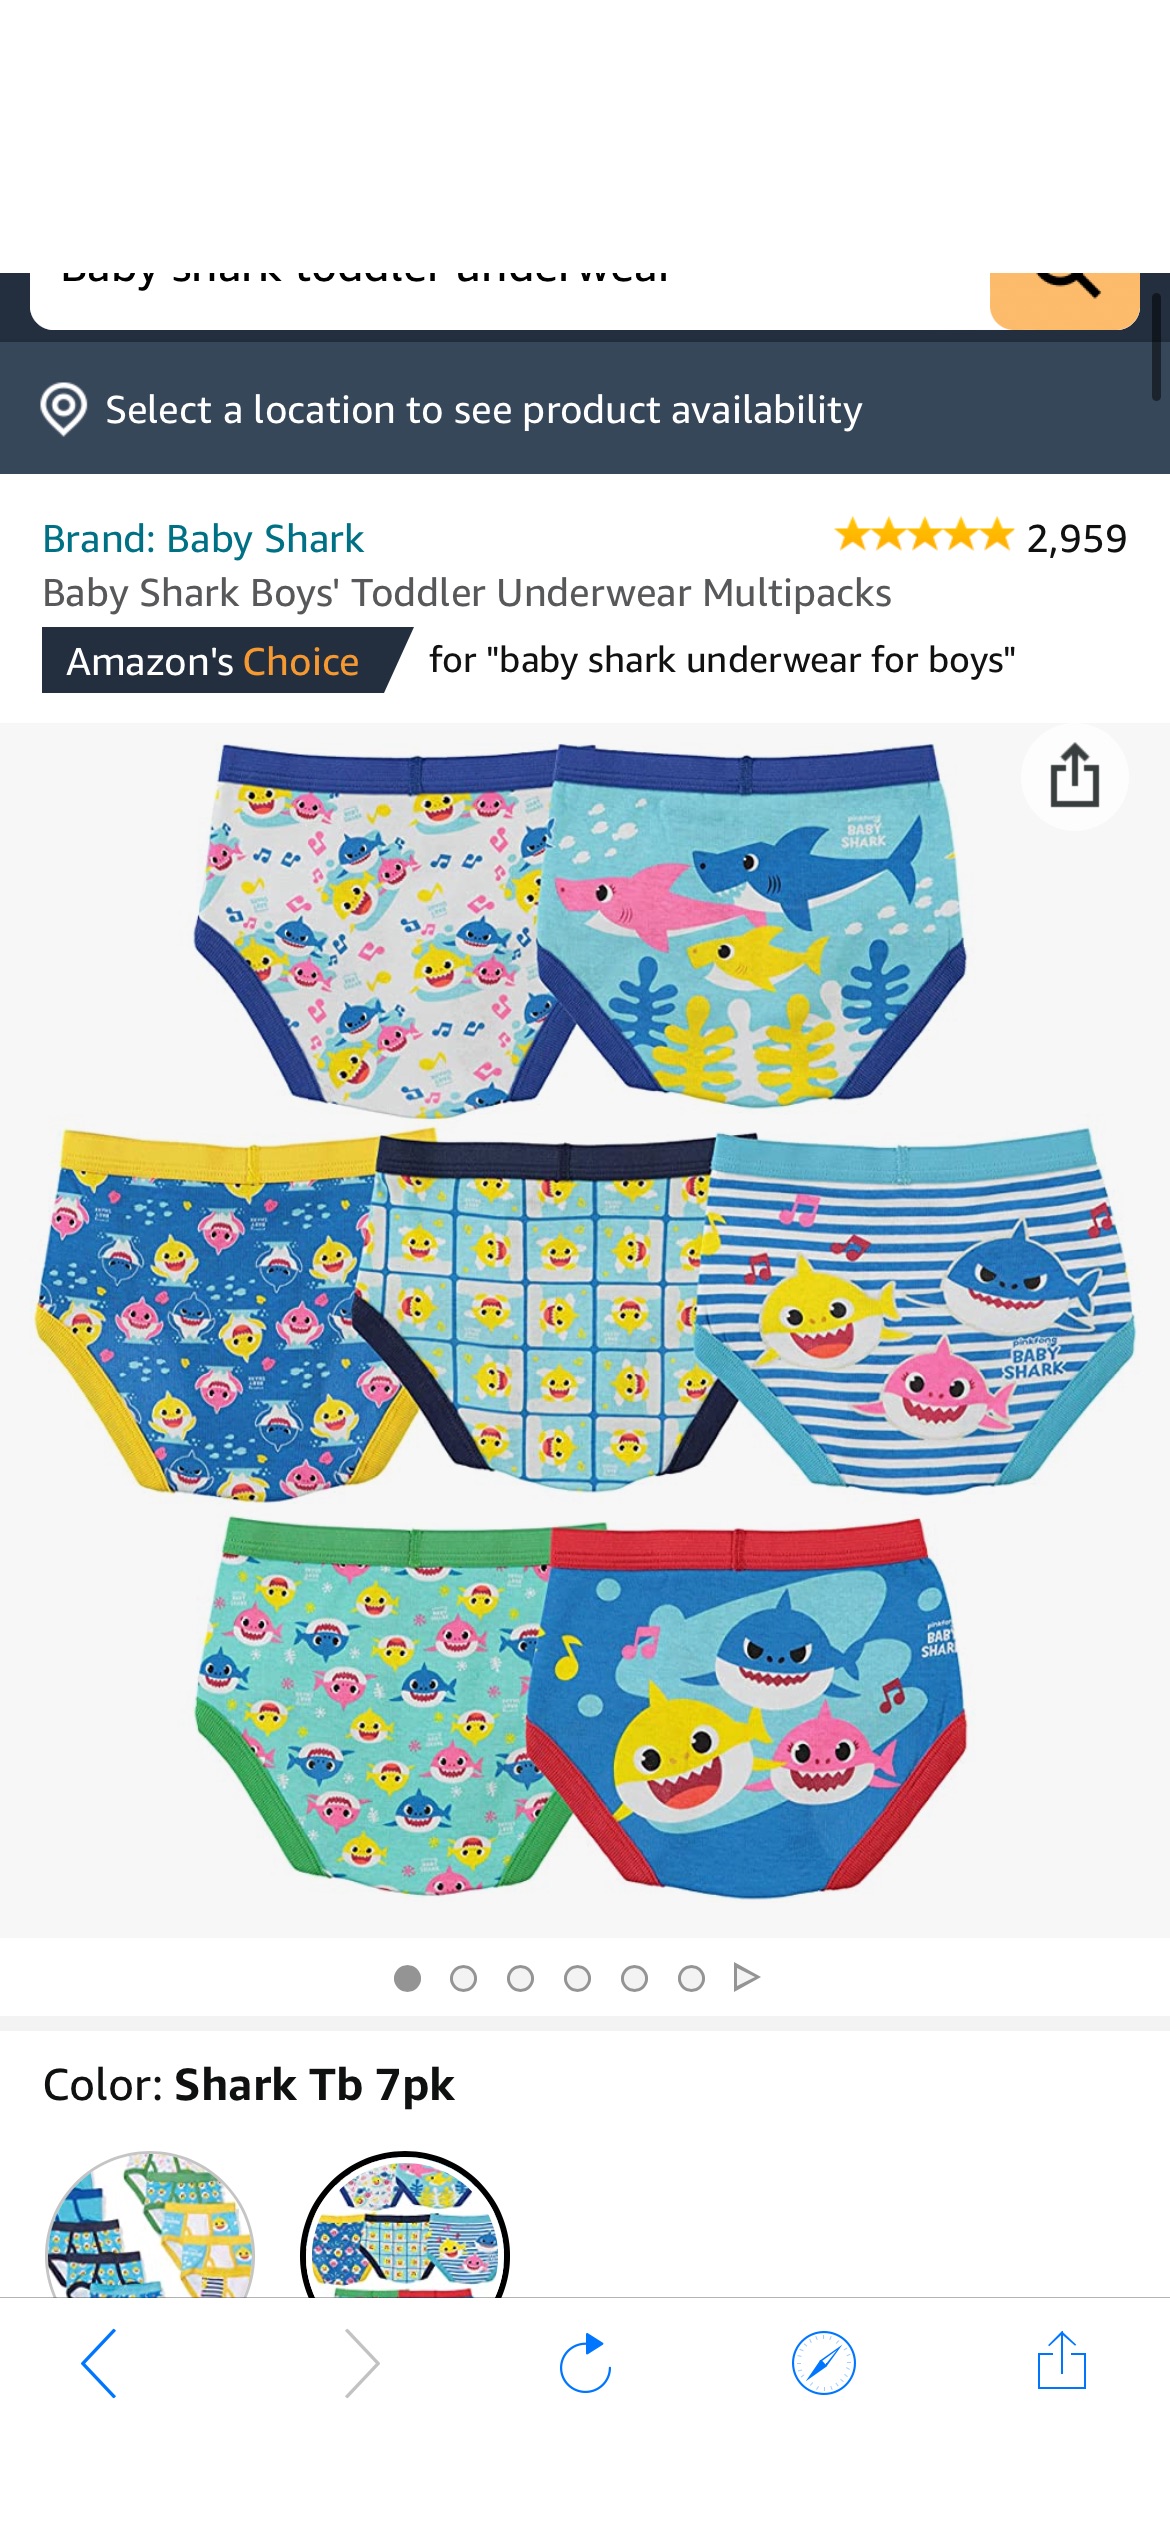 Amazon.com: Baby Shark Boys' Toddler Underwear Multipacks, Shark Tb 7pk, 2T-3T: Clothing,宝宝鲨鱼儿童内裤